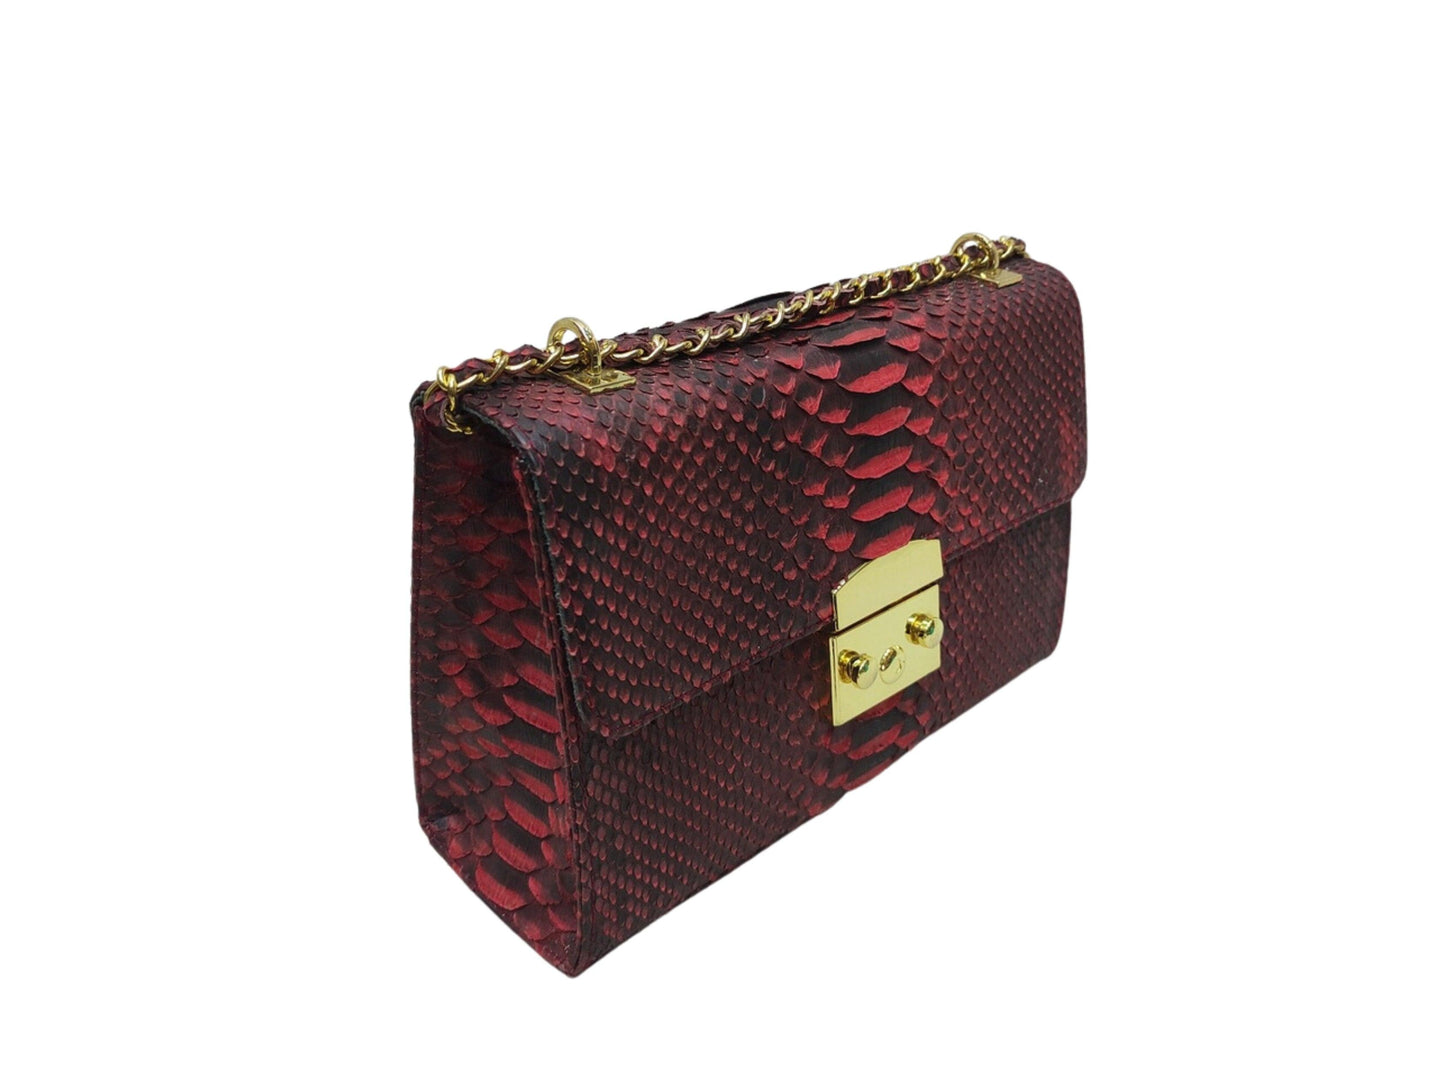 Python Bags Snakeskin Python Small Handbag Python Jacket by LFM Fashion